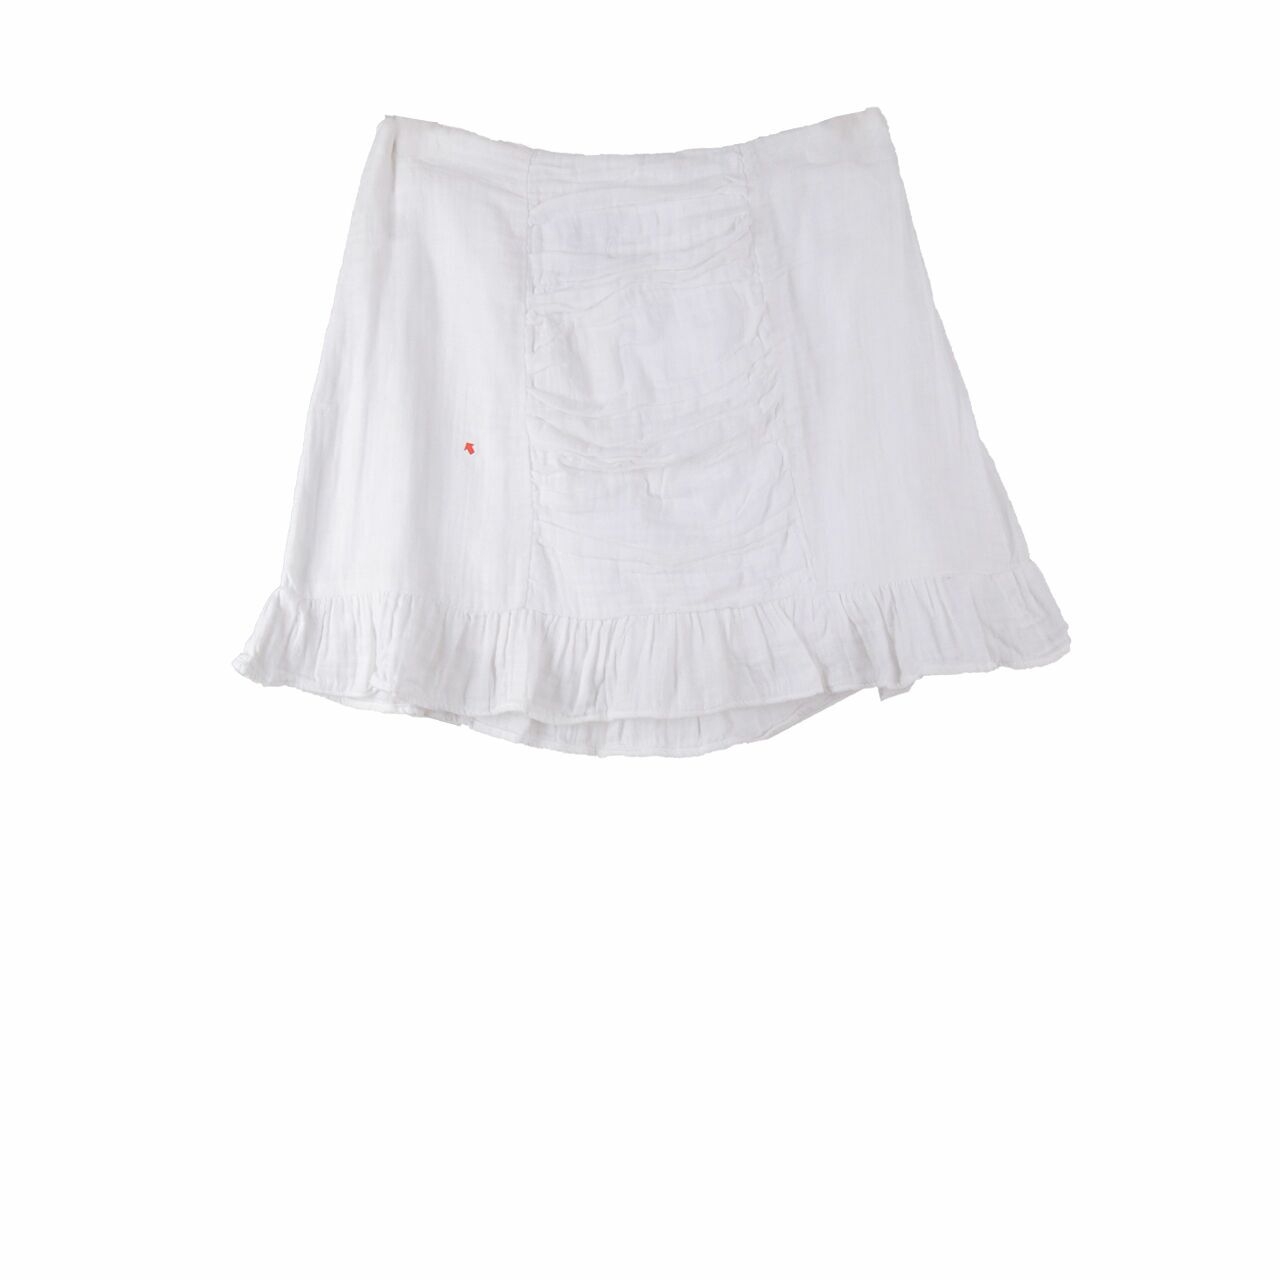 Bamboo Blonde White Mini Skirt